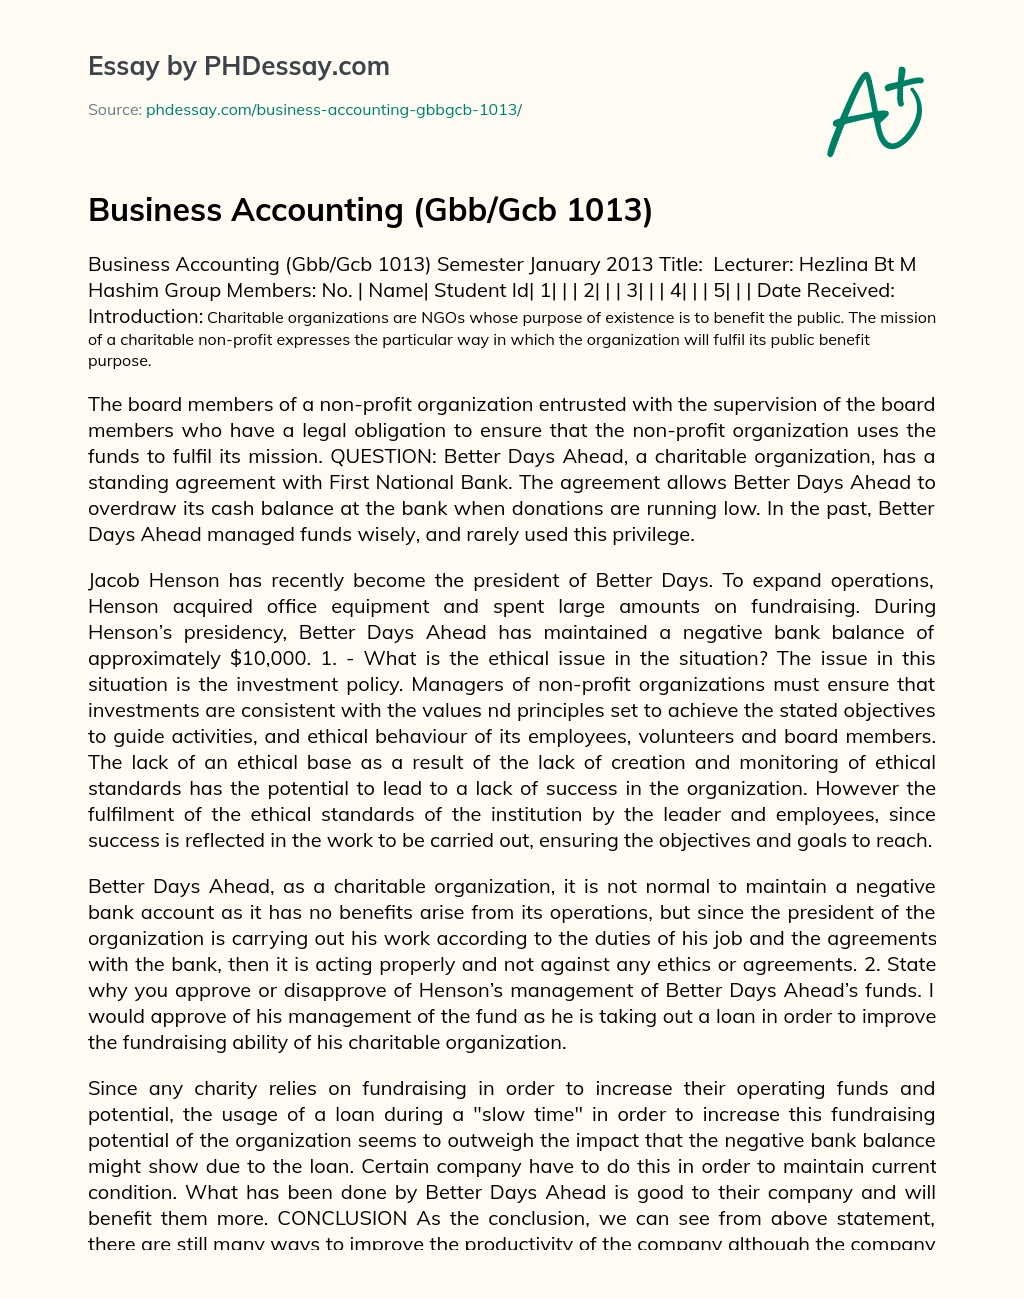 Business Accounting (Gbb/Gcb 1013) essay